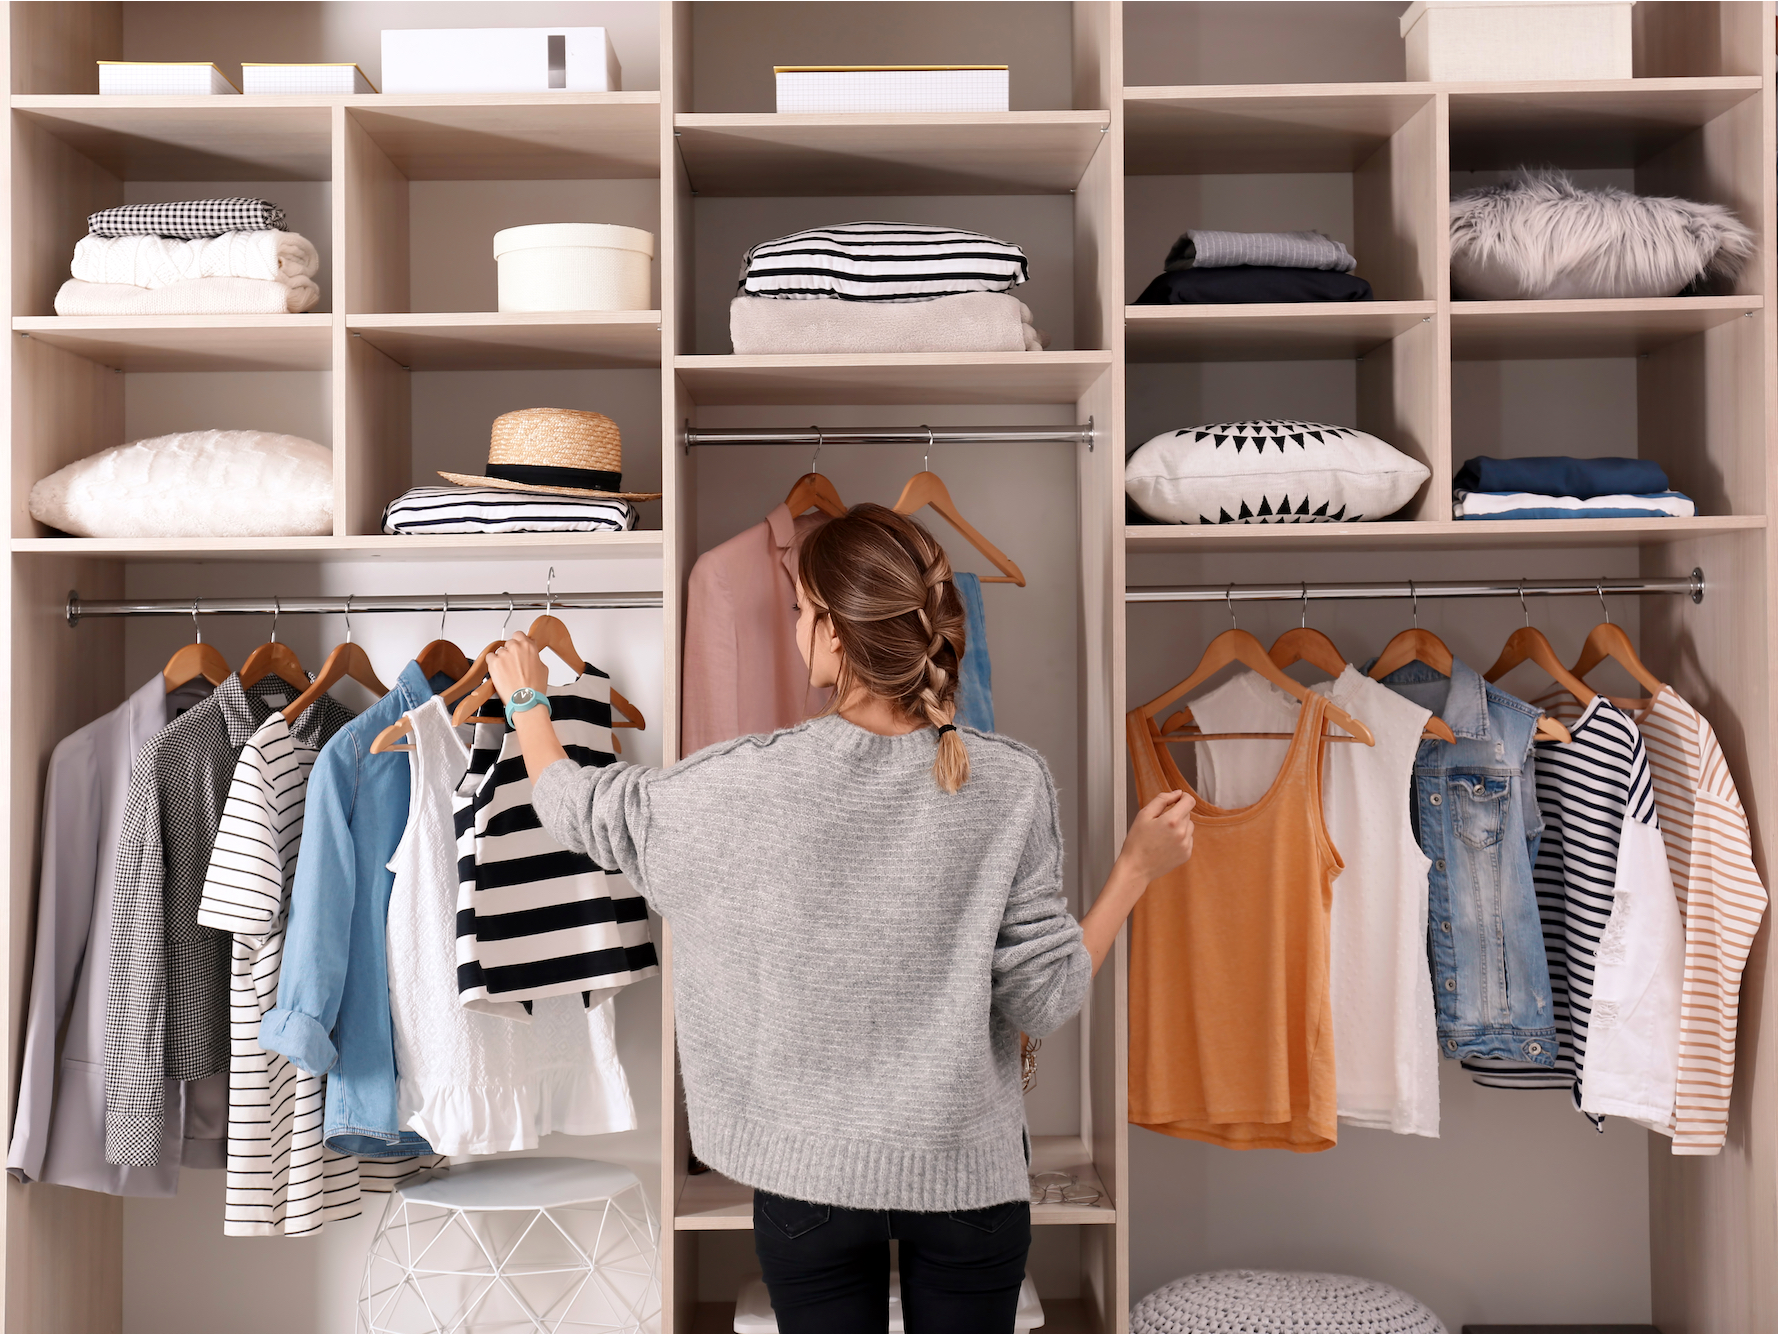 How to arrange clothes on a shelf ?